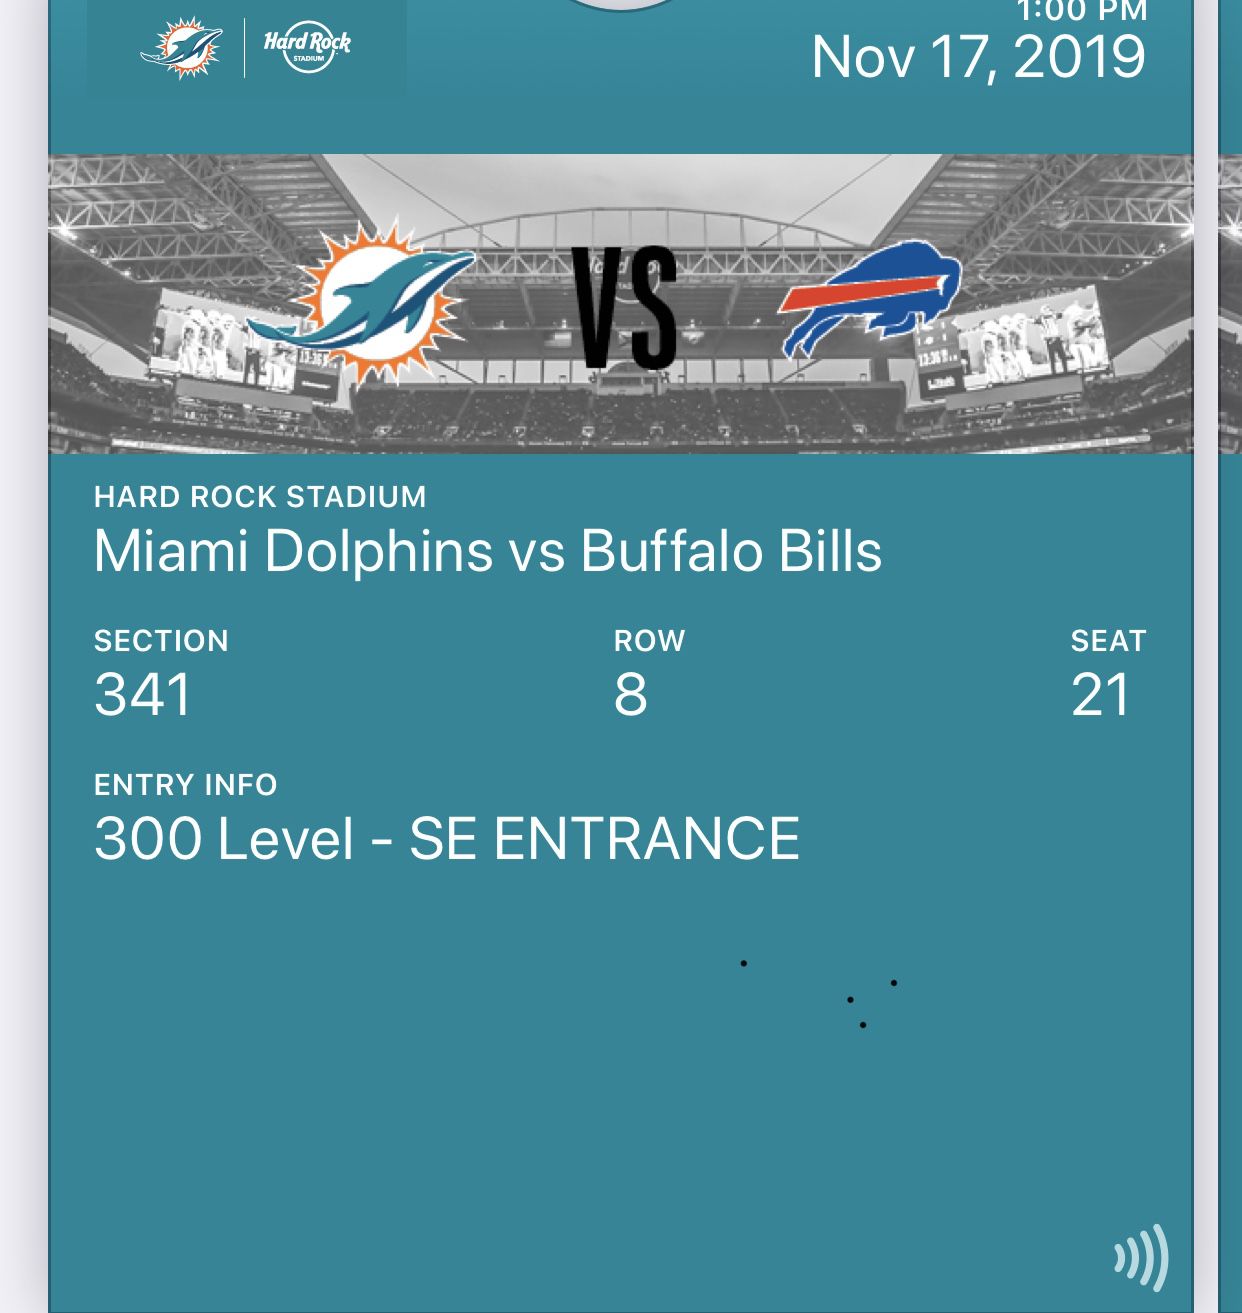 Buffalo Bills vs Miami Dolphins ticket